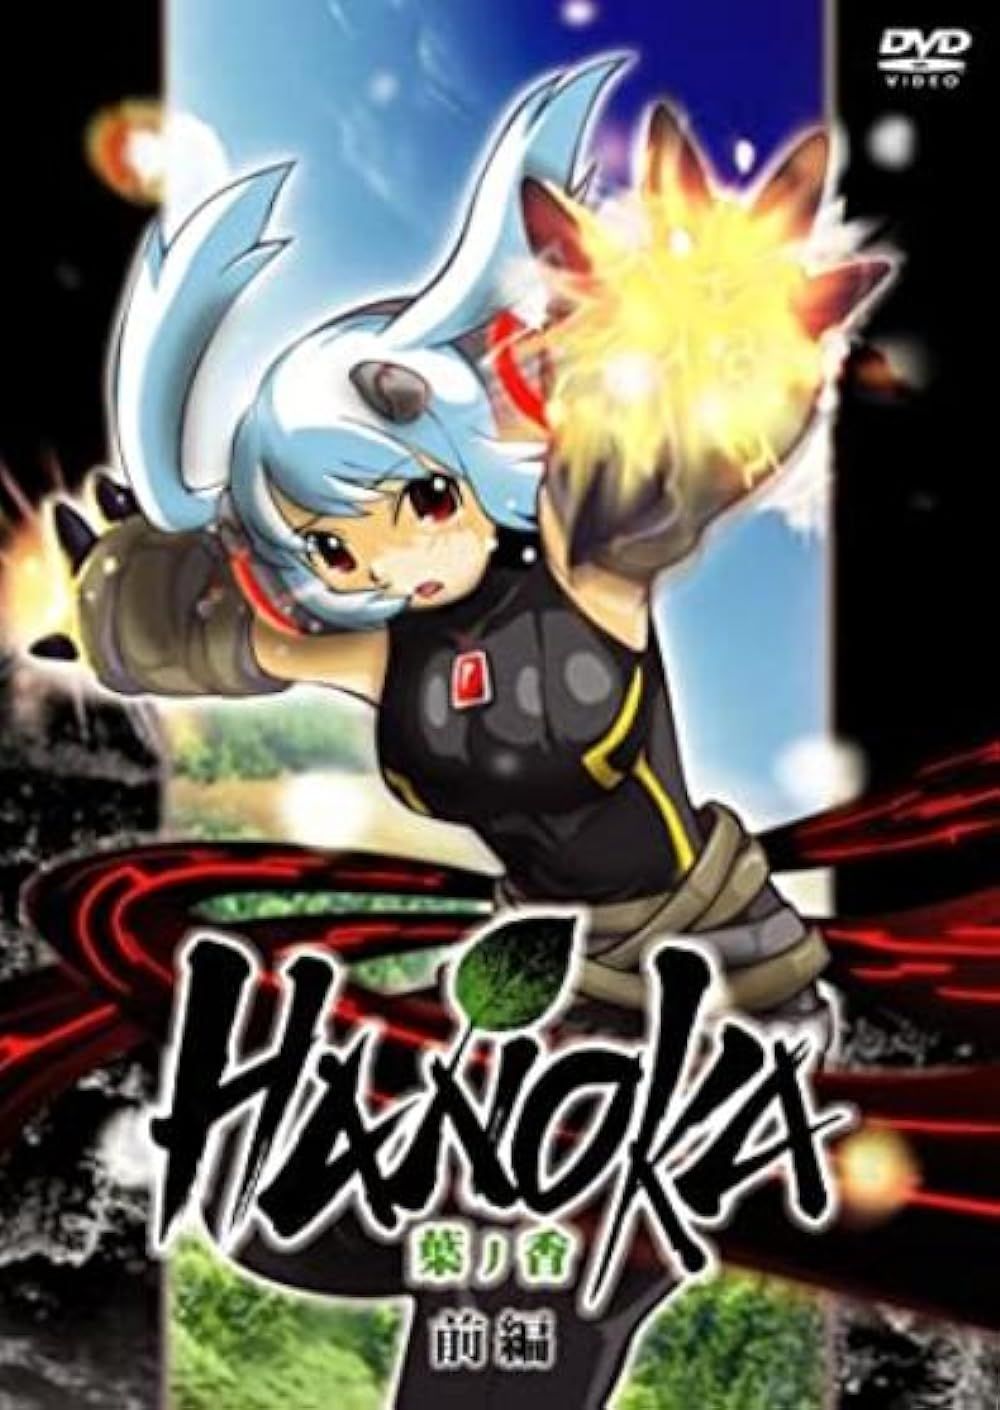 Hanoko on the poster of her series